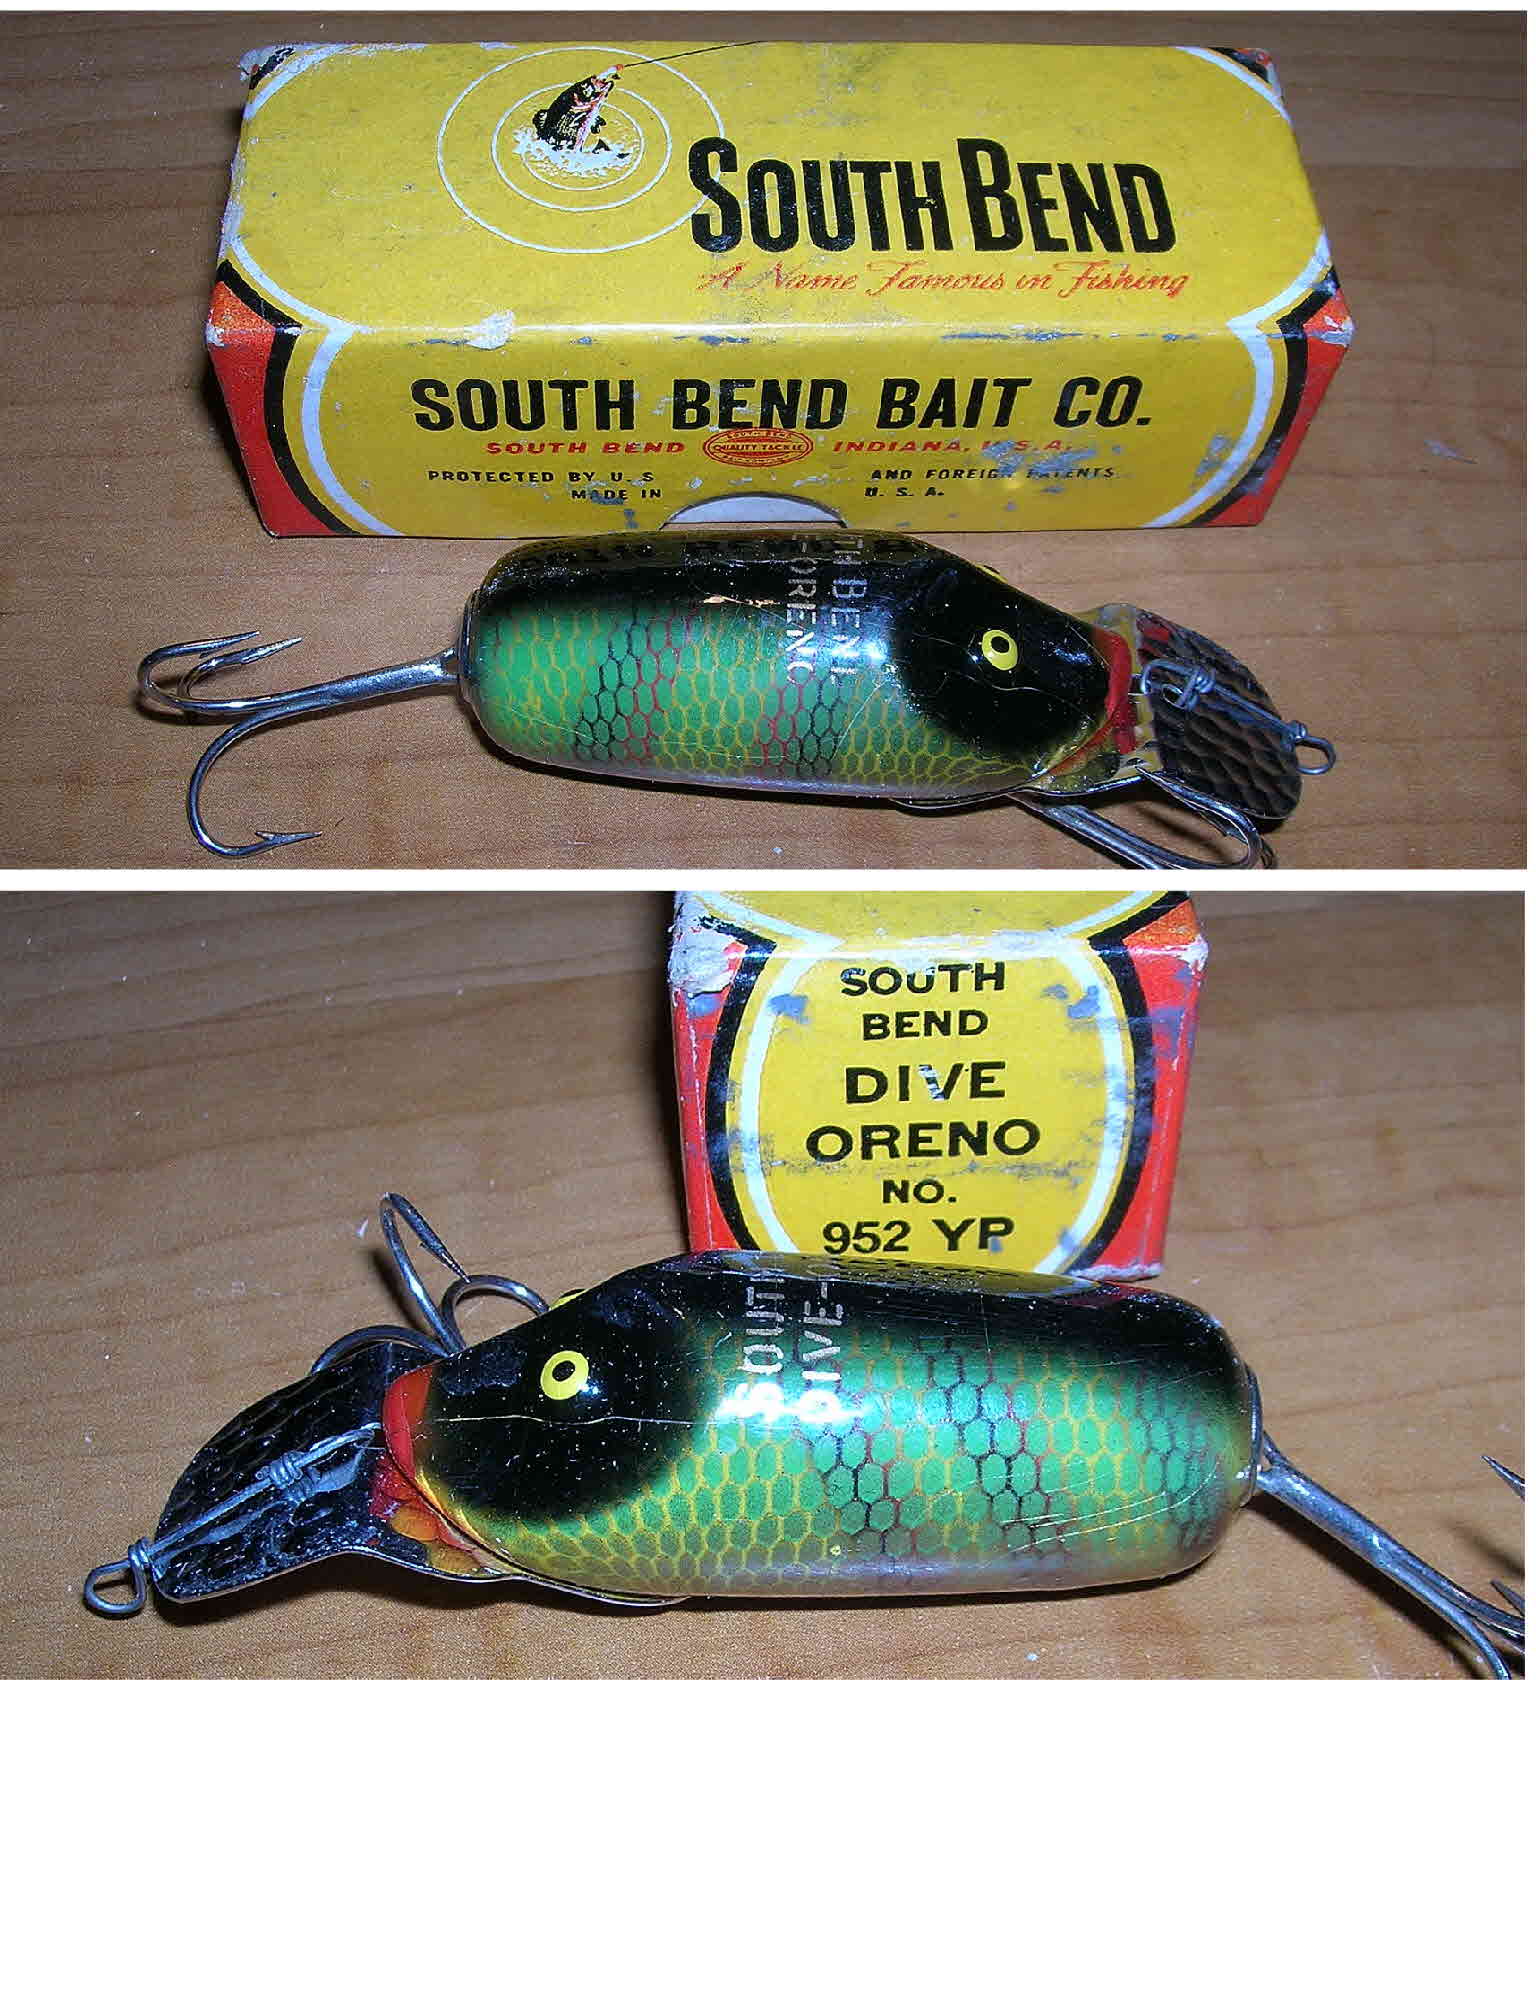 Vintage South Bend Babe-oreno No. 972 SF Green Blend Fishing Lure in Original  Box / Antique Fishing Lure South Bend Babe-oreno No 972 SF -  Denmark